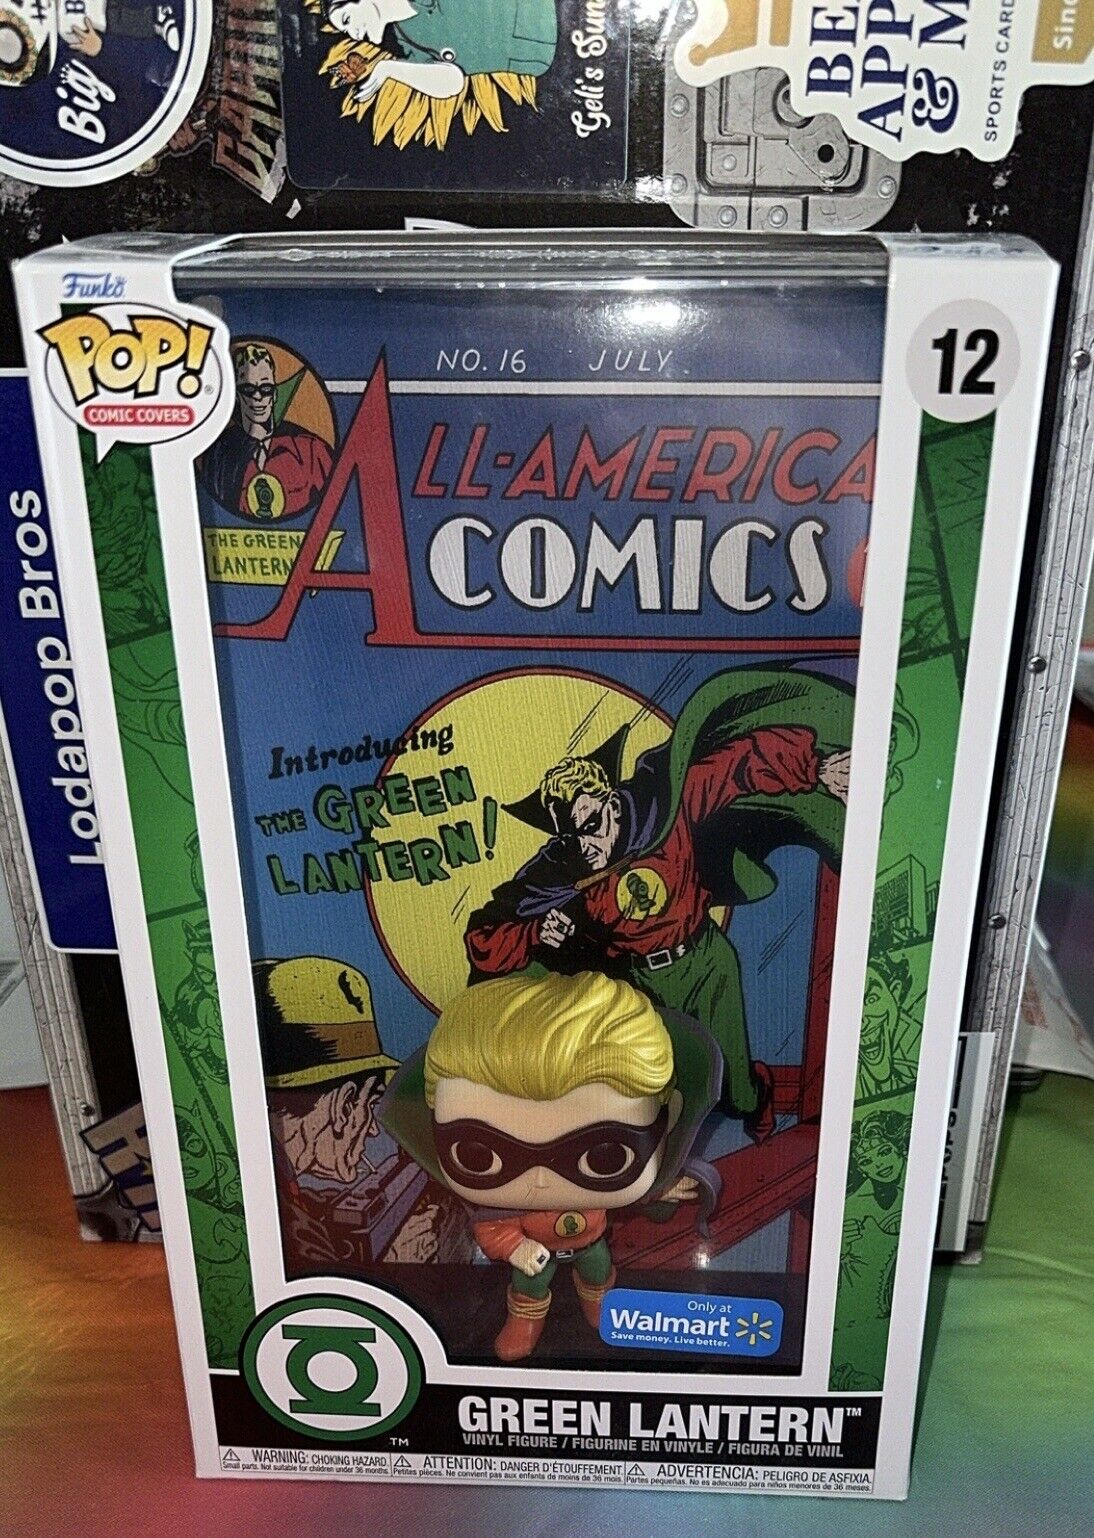 Funko Pop Comic Book Cover with Case: DC Universe - Green Lantern - Walmart...